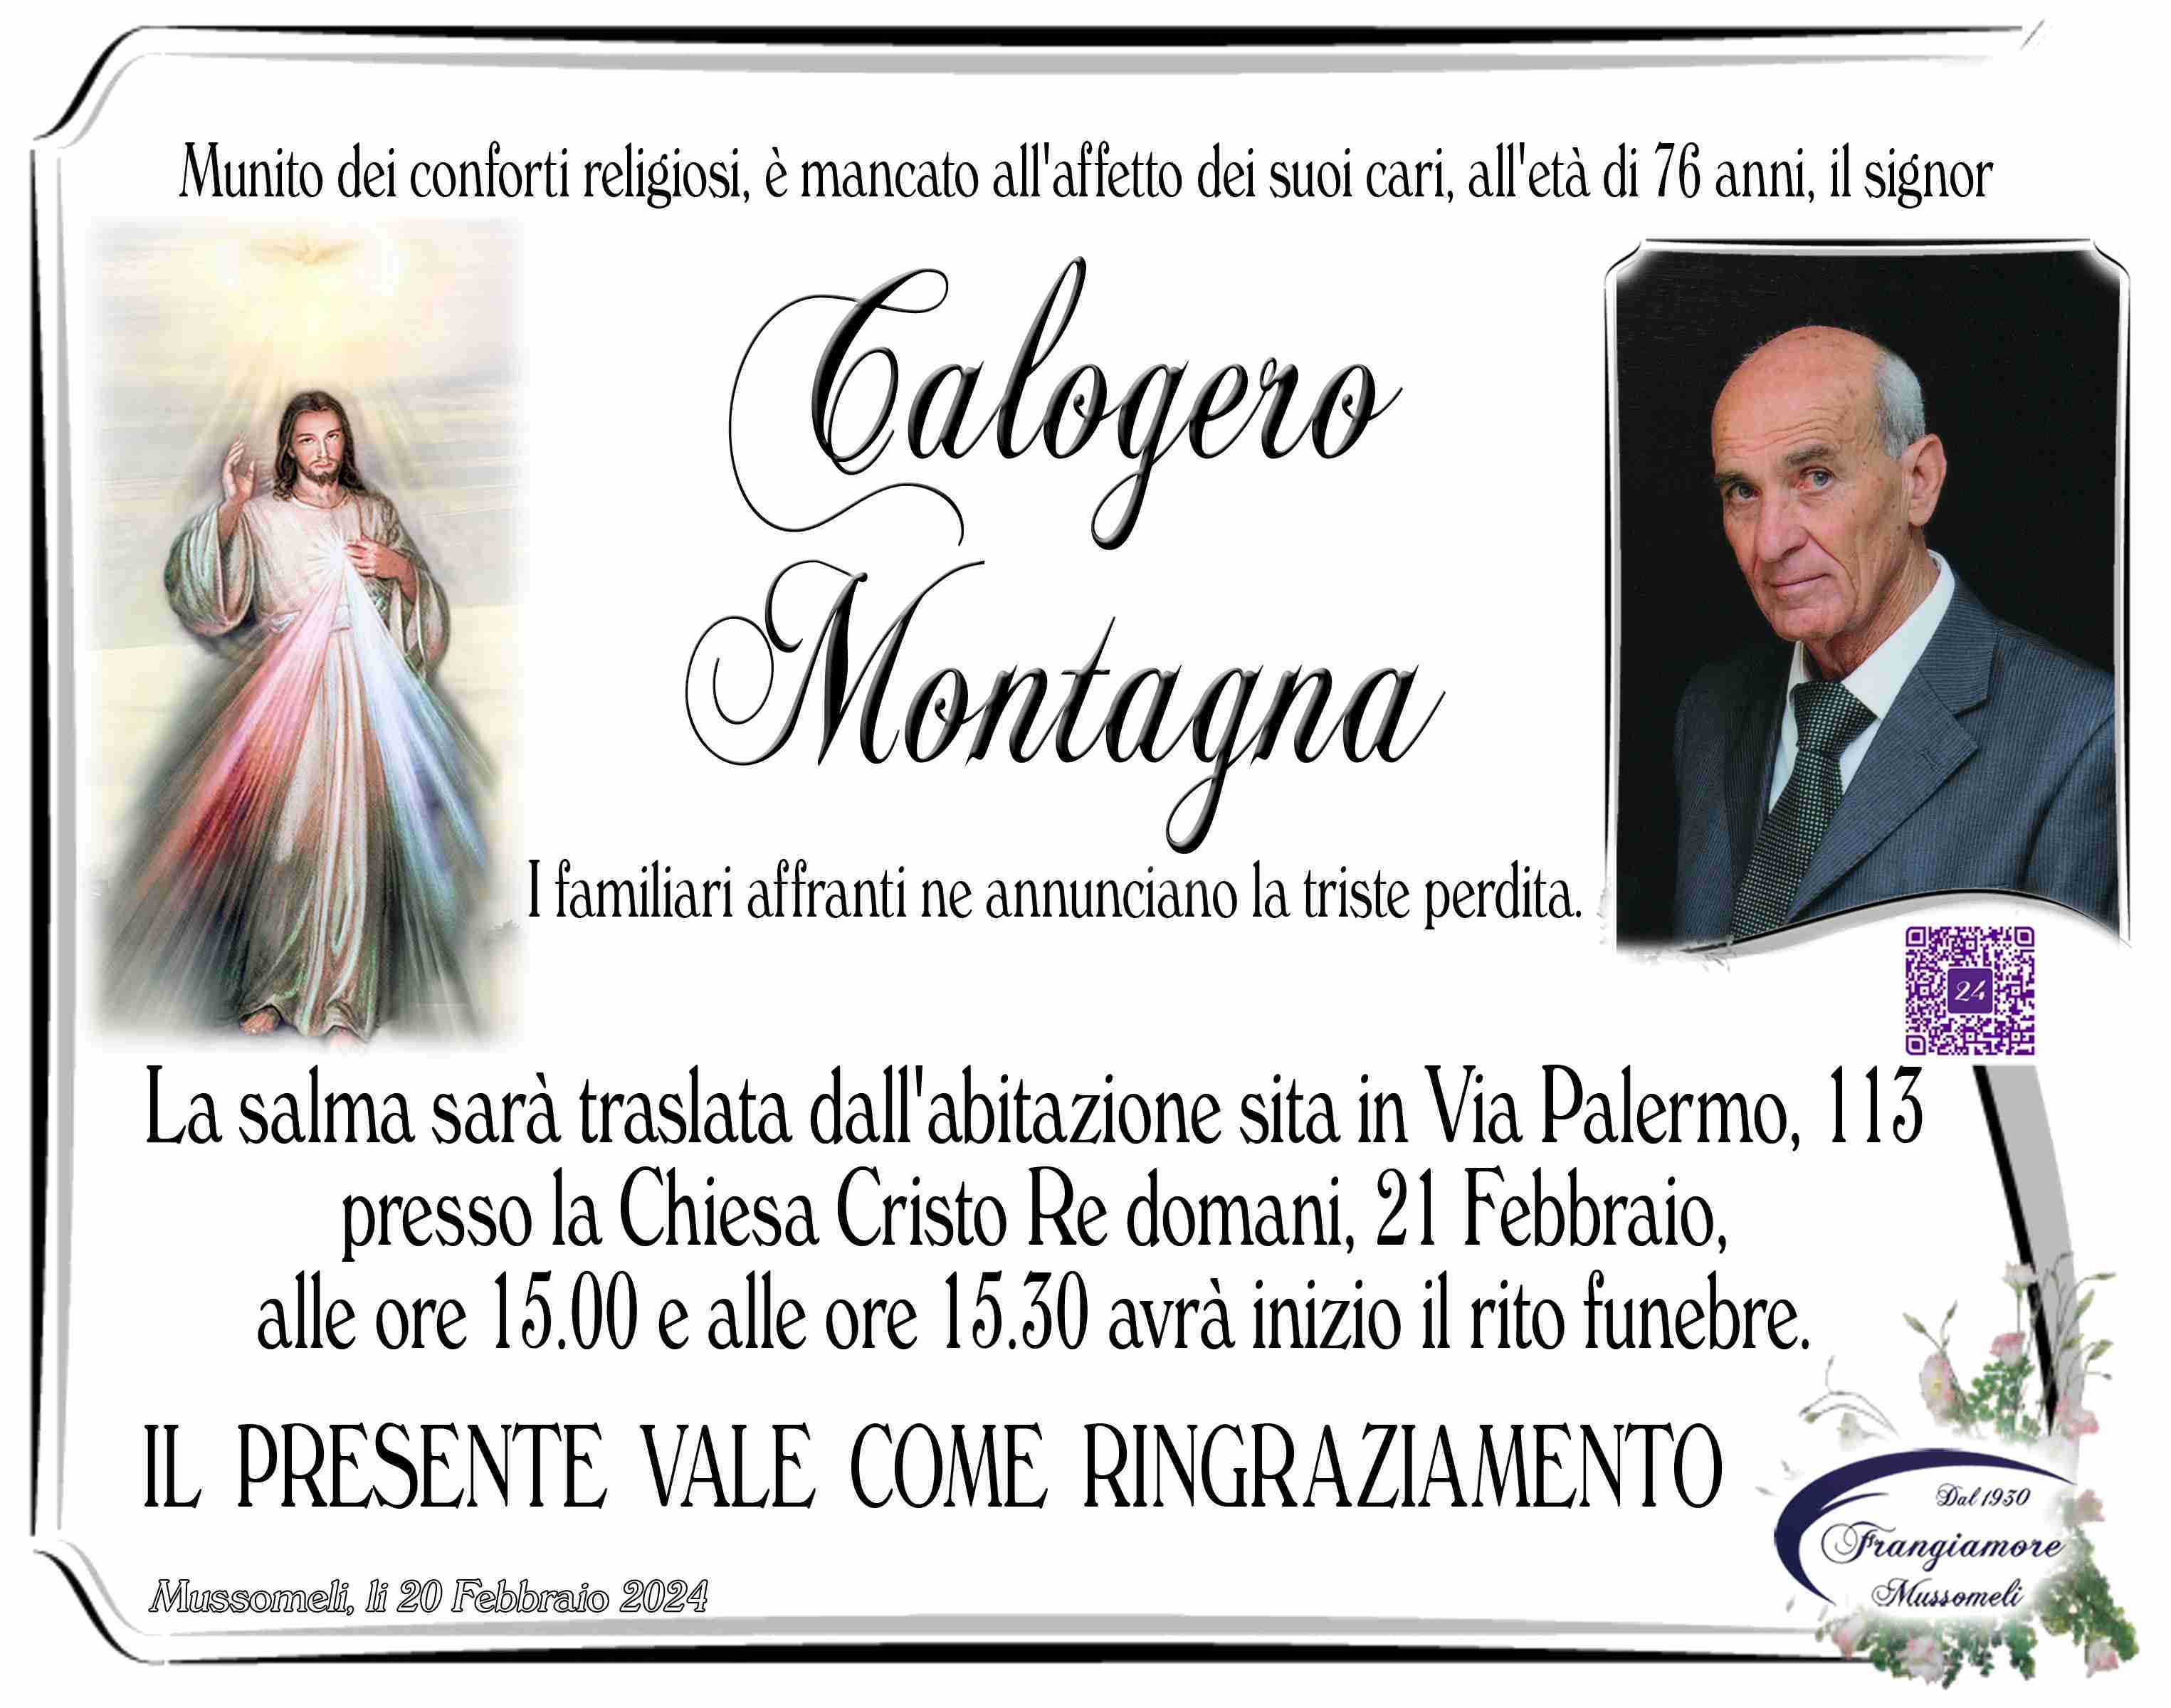 Calogero Montagna